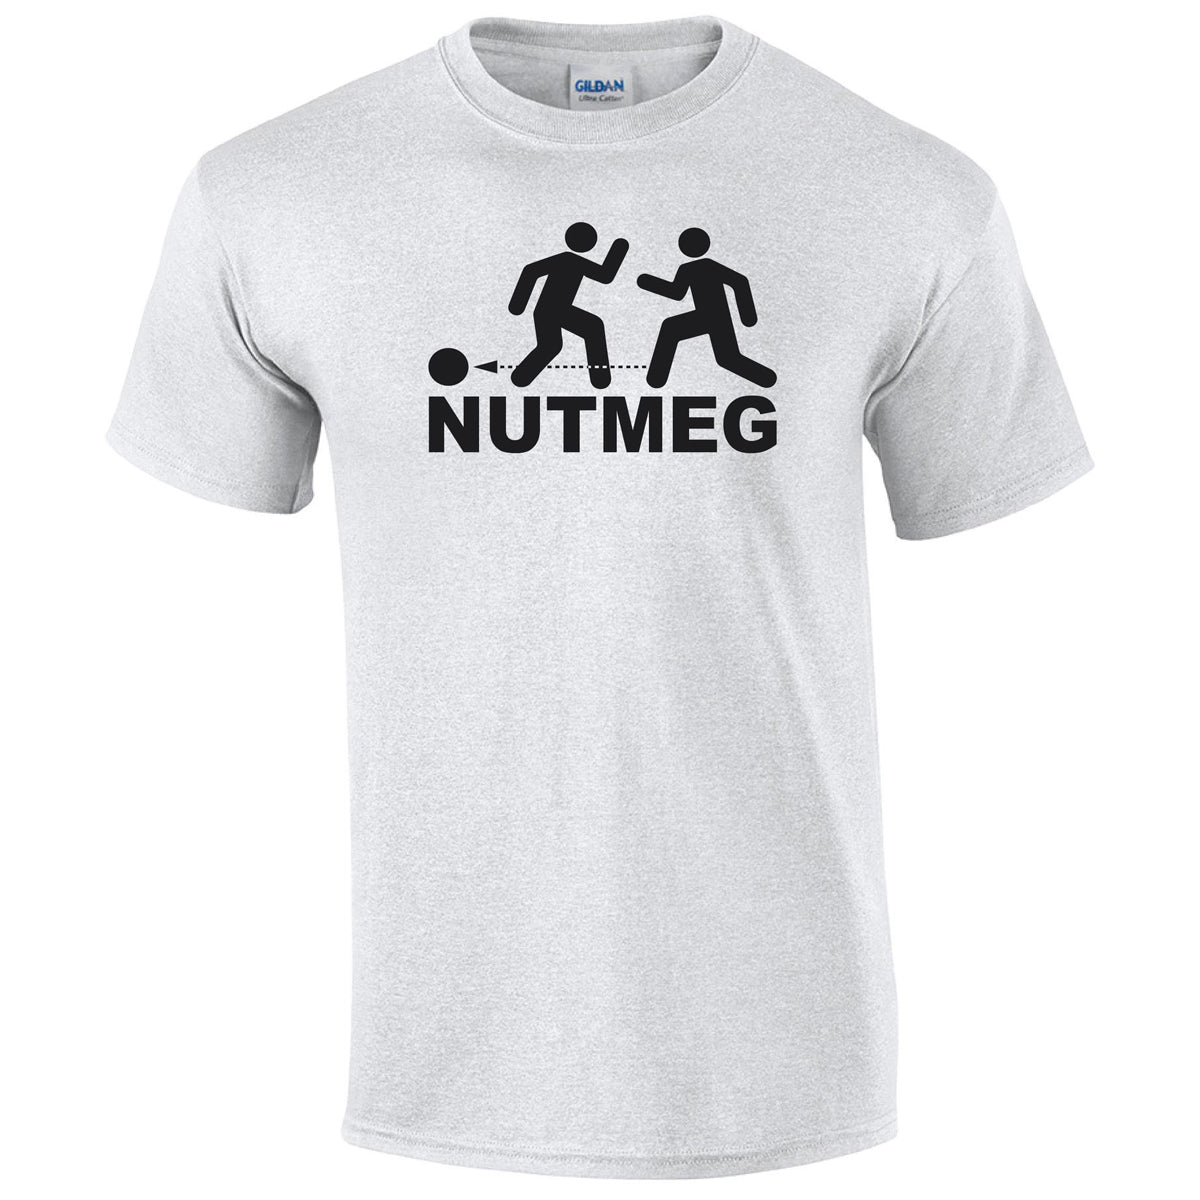 Nutmeg, Shirts